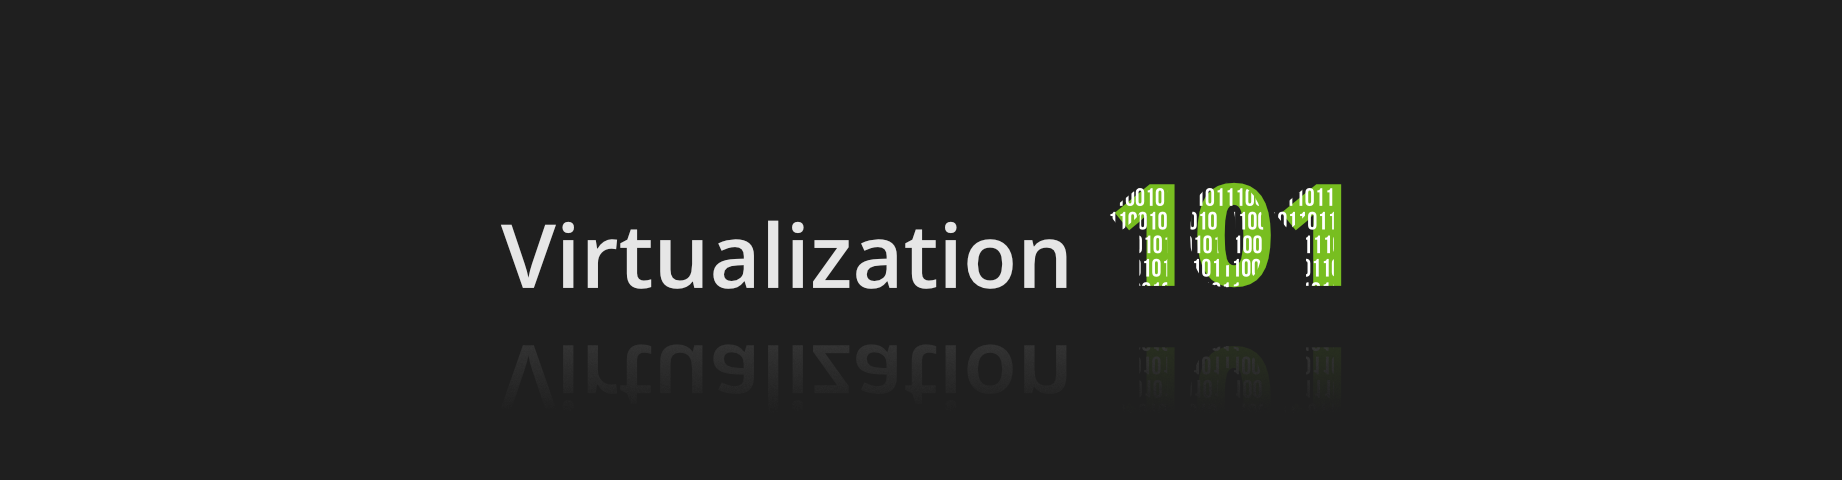 virtualization introduction